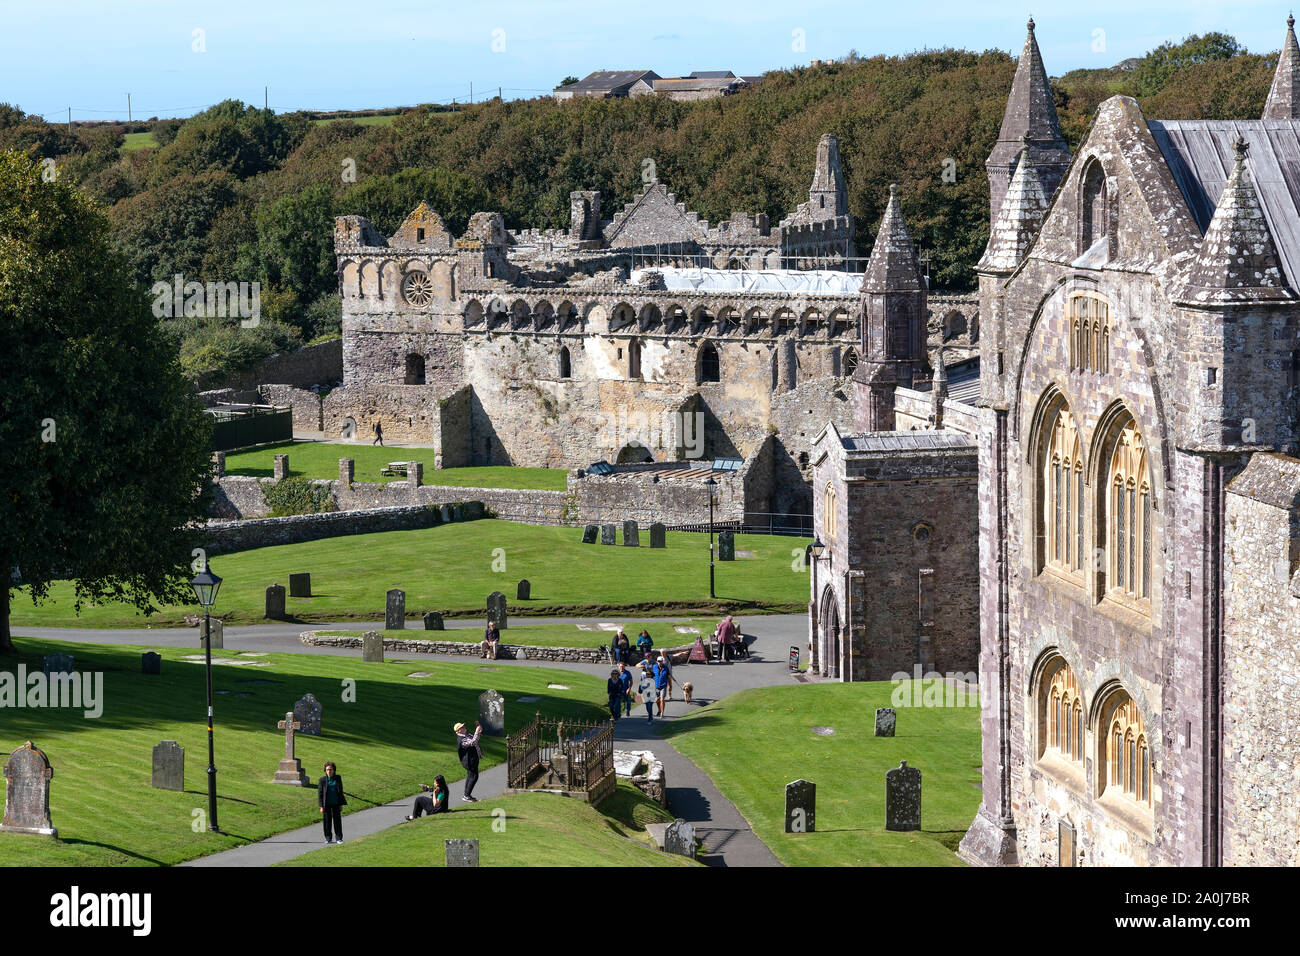 ST DAVID'S, PEMBROKESHIRE/UK - 13. SEPTEMBER: Blick auf die Kathedrale von St. David's in Pembrokeshire am 13. September 2019. Unidentied Menschen Stockfoto